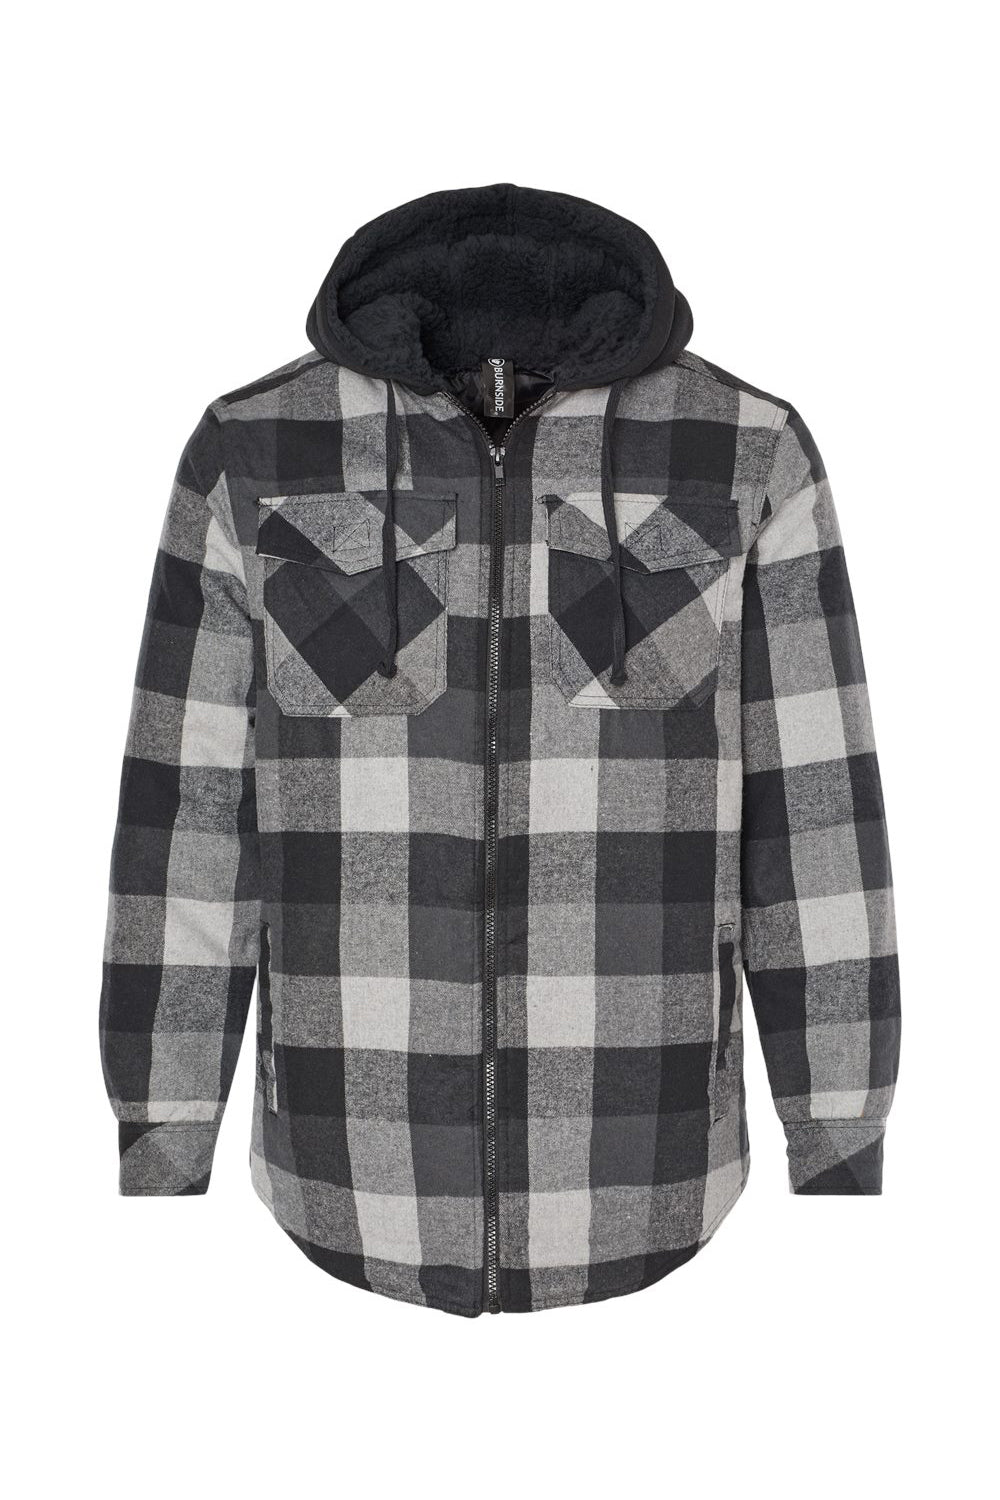 Burnside 8620 Mens Quilted Flannel Full Zip Hooded Jacket Black/Grey Flat Front